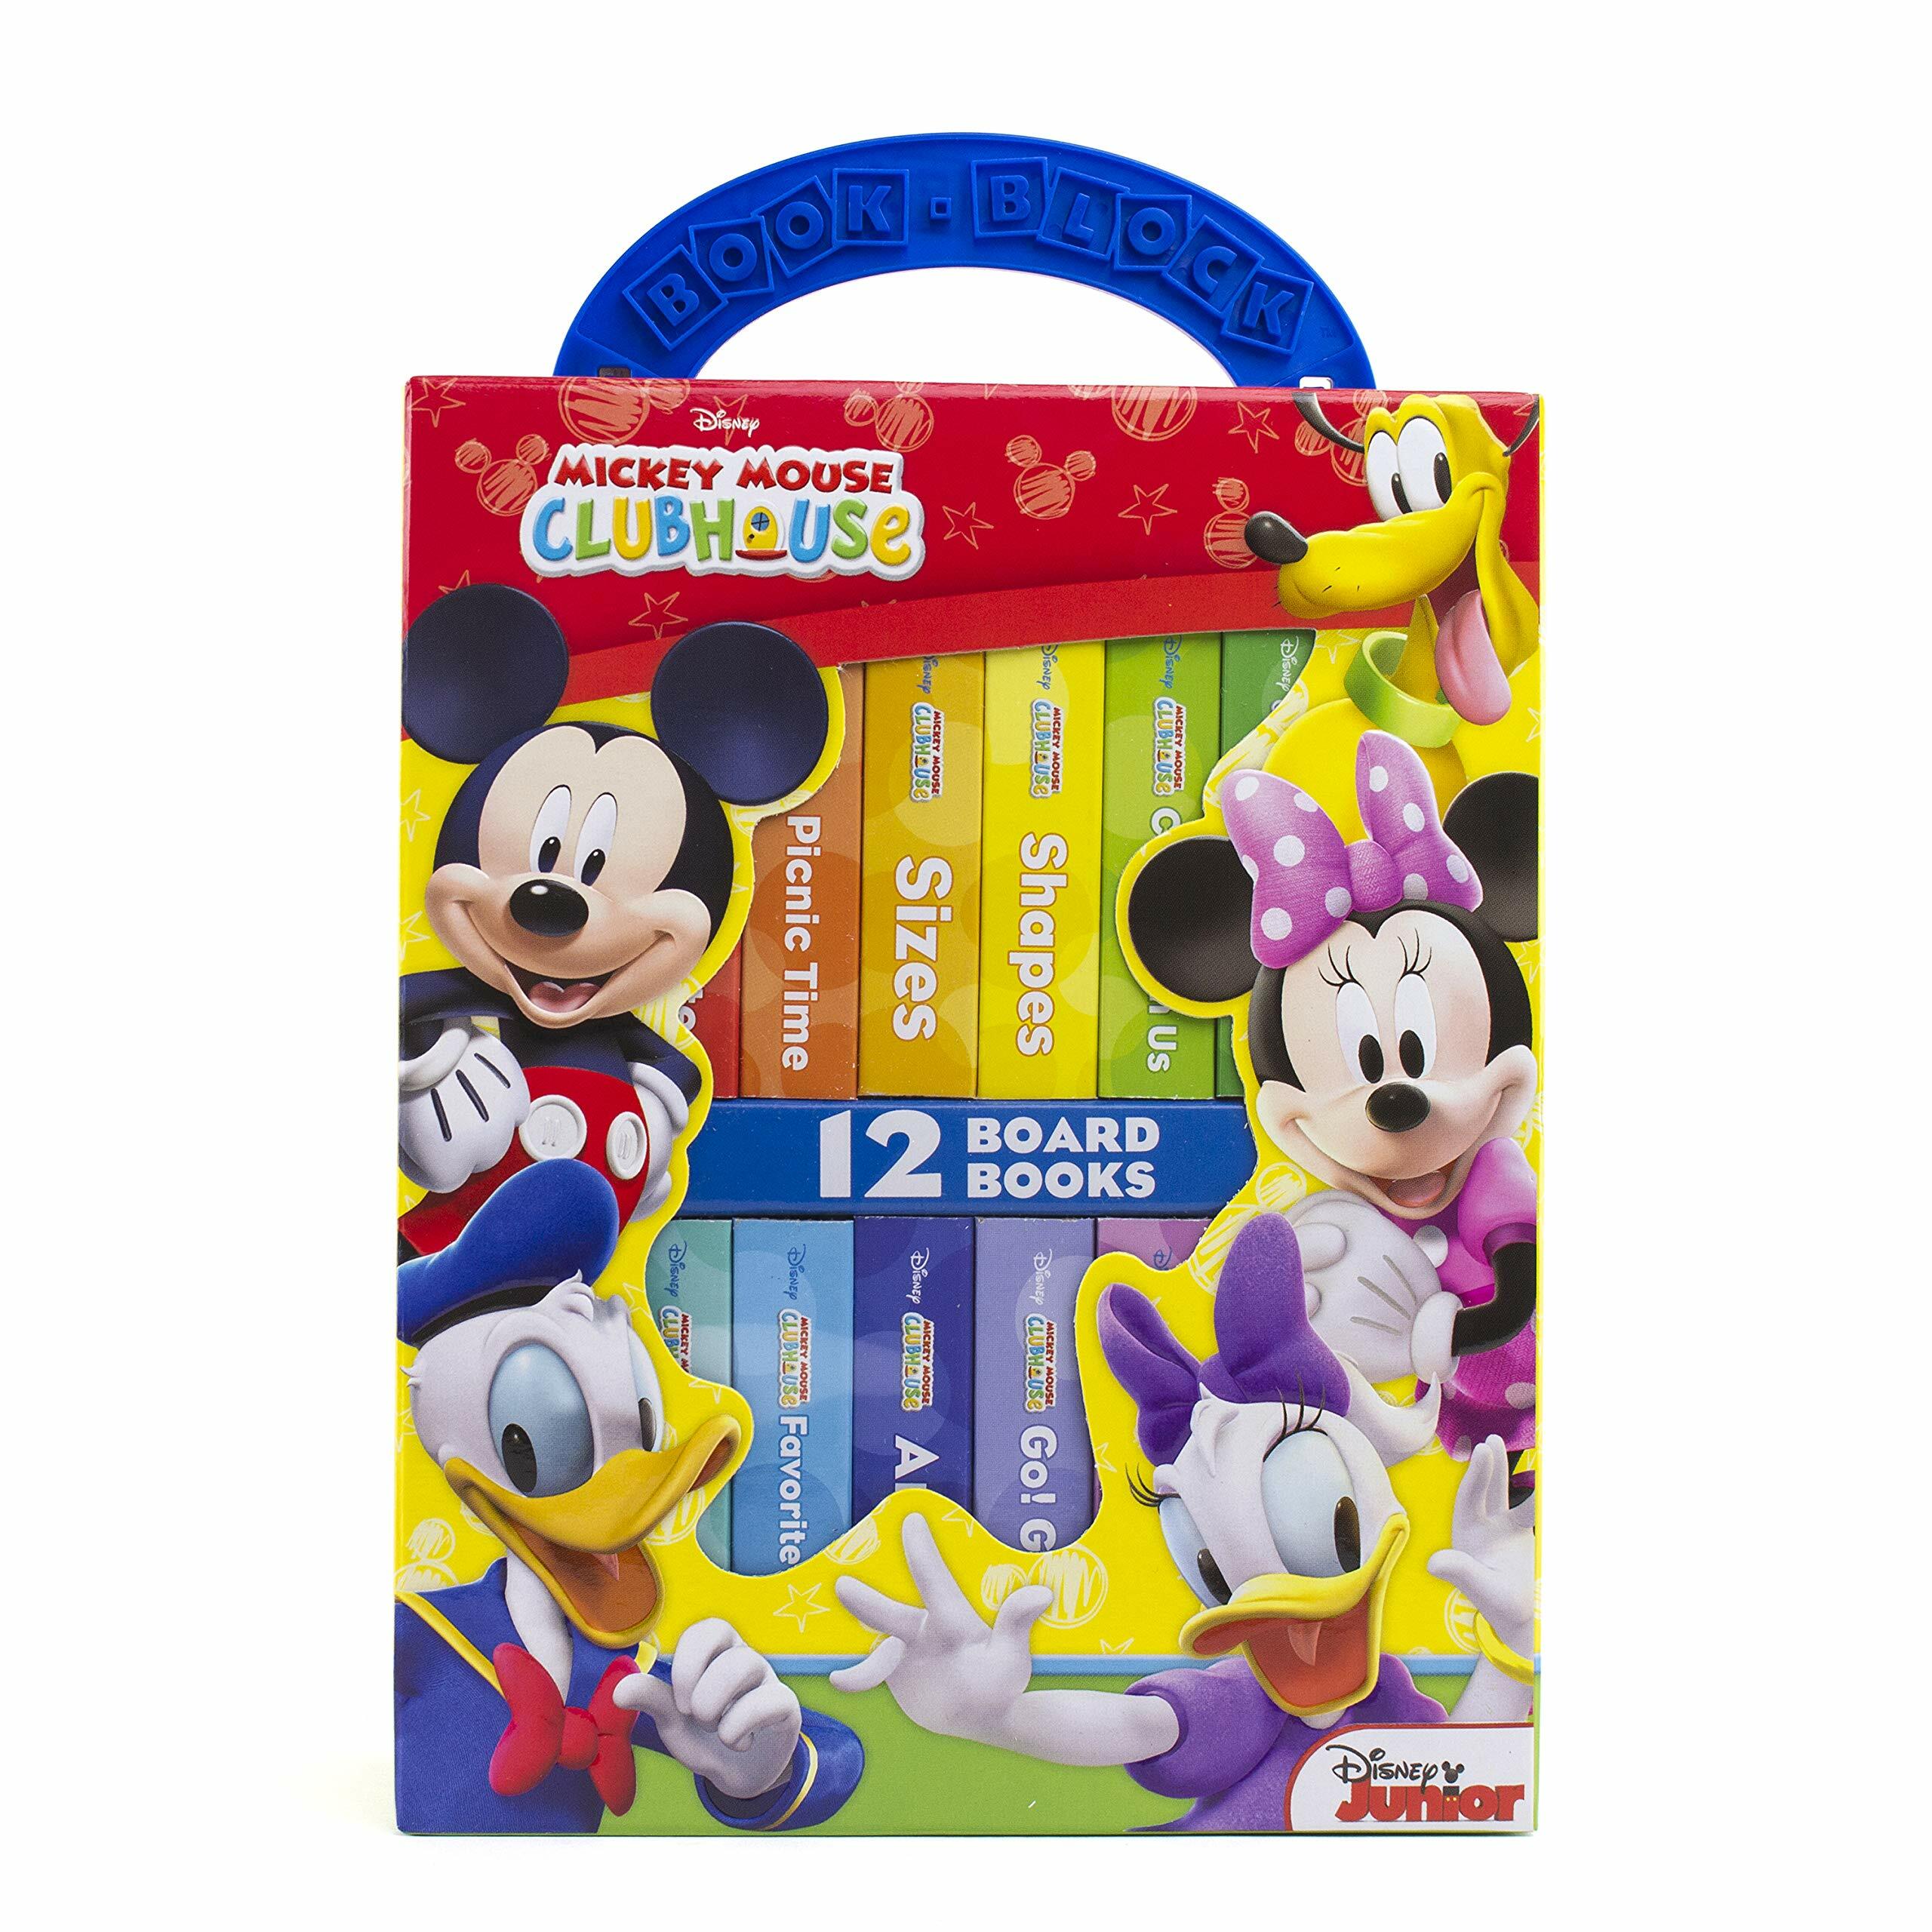 Disney Junior Mickey Mouse Clubhouse 12 Board Books Boxed Set (Board Book 12권)